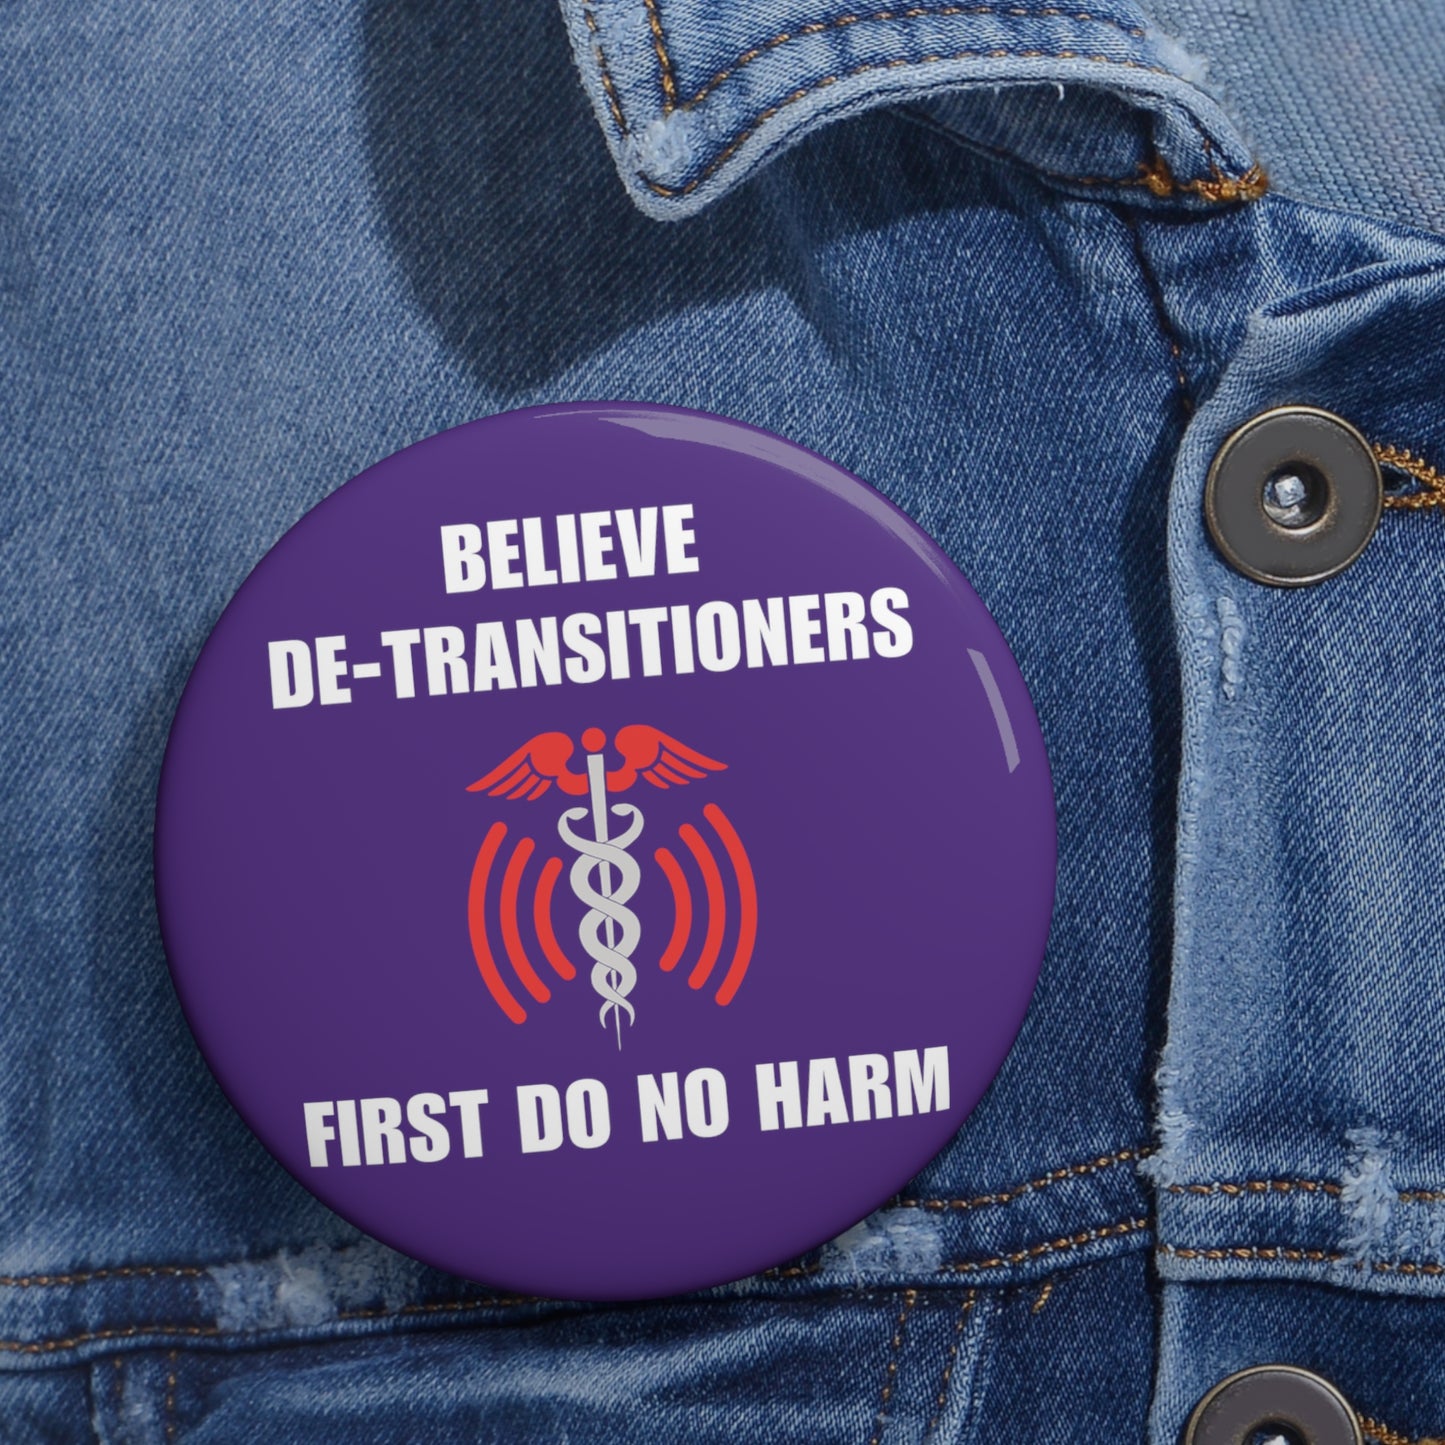 Believe De-transitioners- First Do Not Harm Button Pins